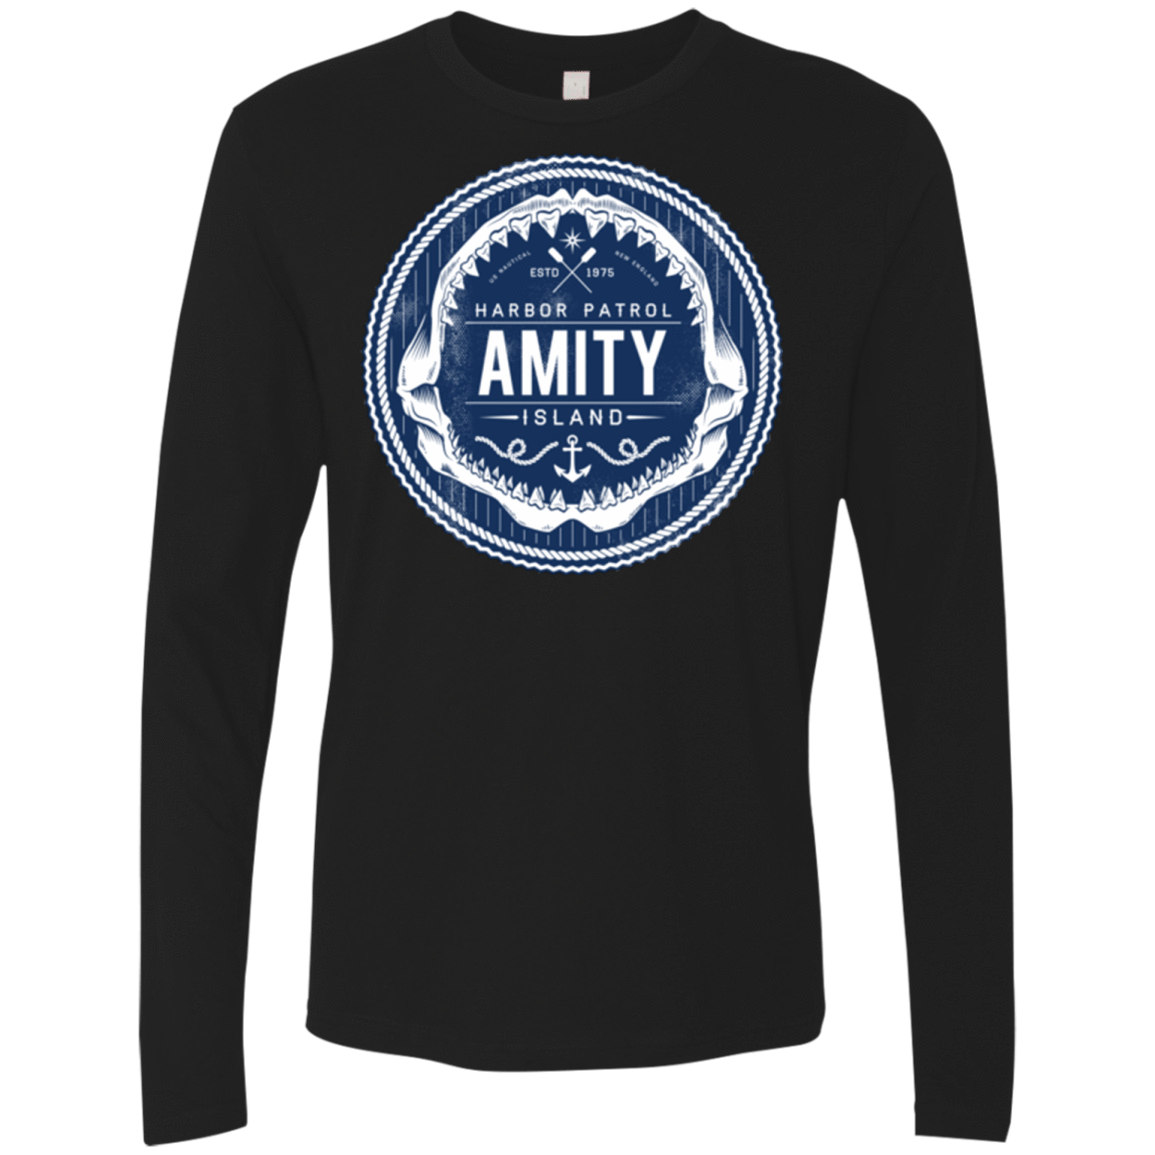 T-Shirts Black / Small Amity nemons Men's Premium Long Sleeve